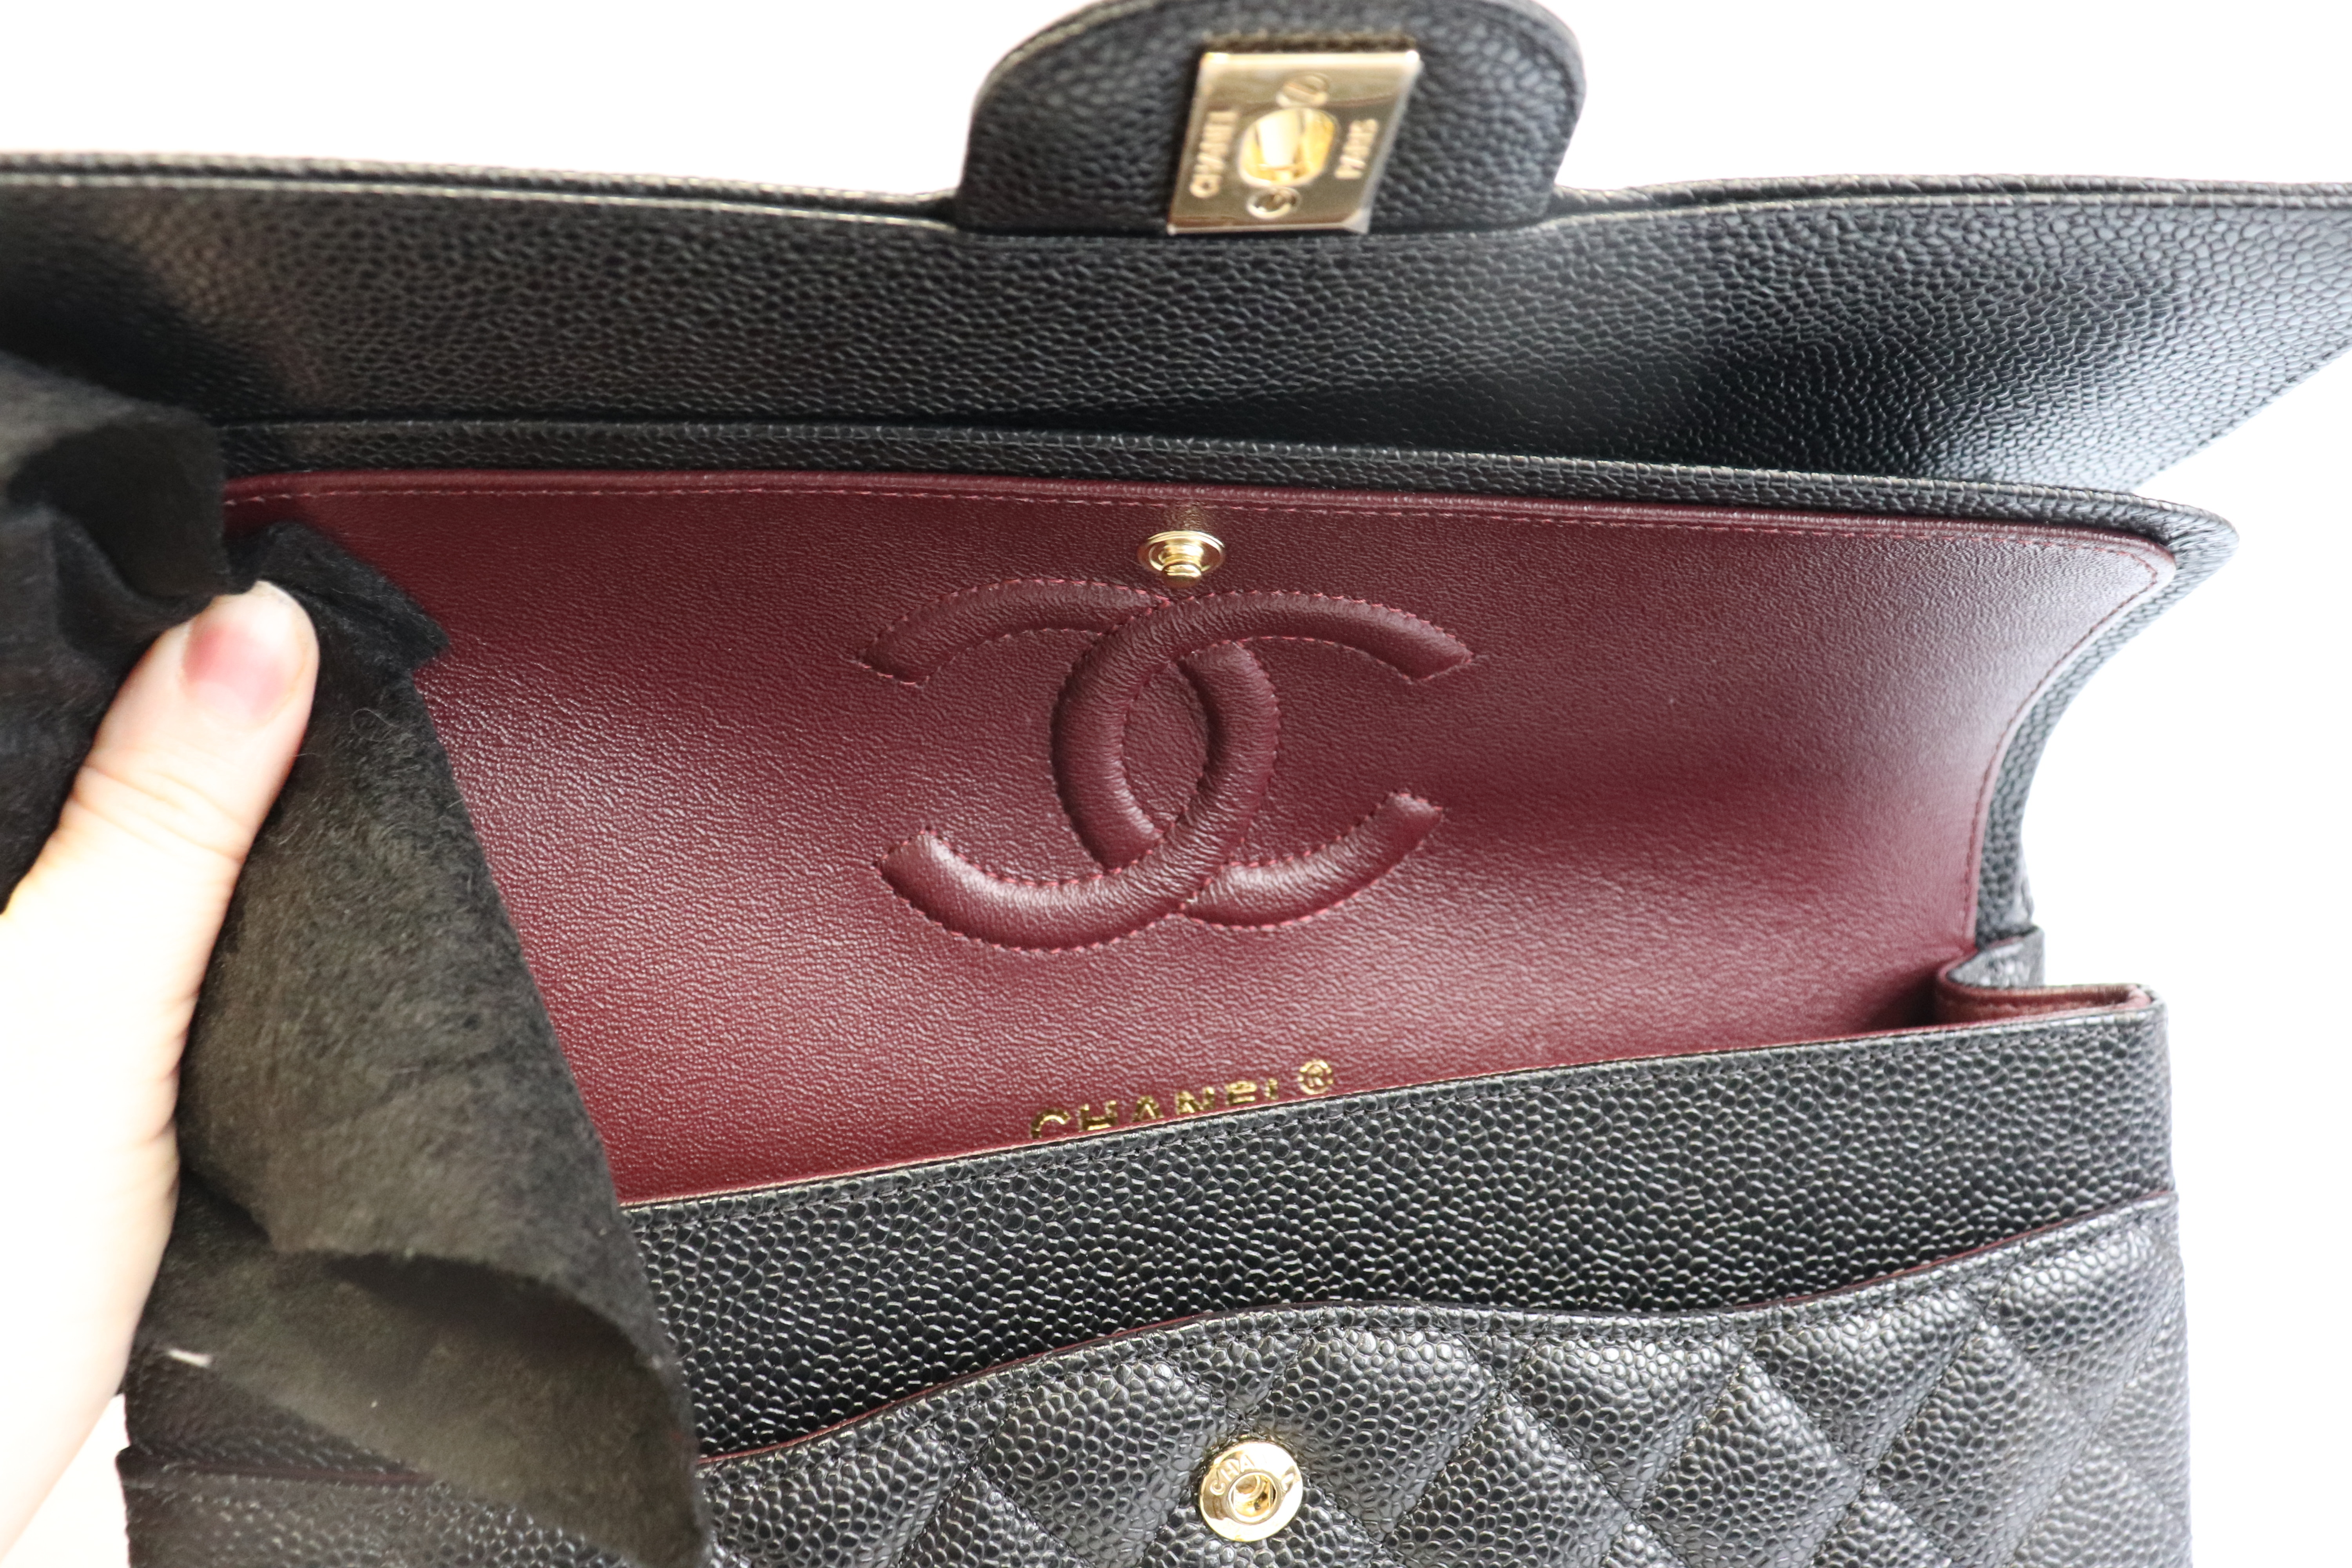 * BOSTON Chanel Classic Medium Double Flap, Black Caviar Leather, Gold  Hardware, New in Box